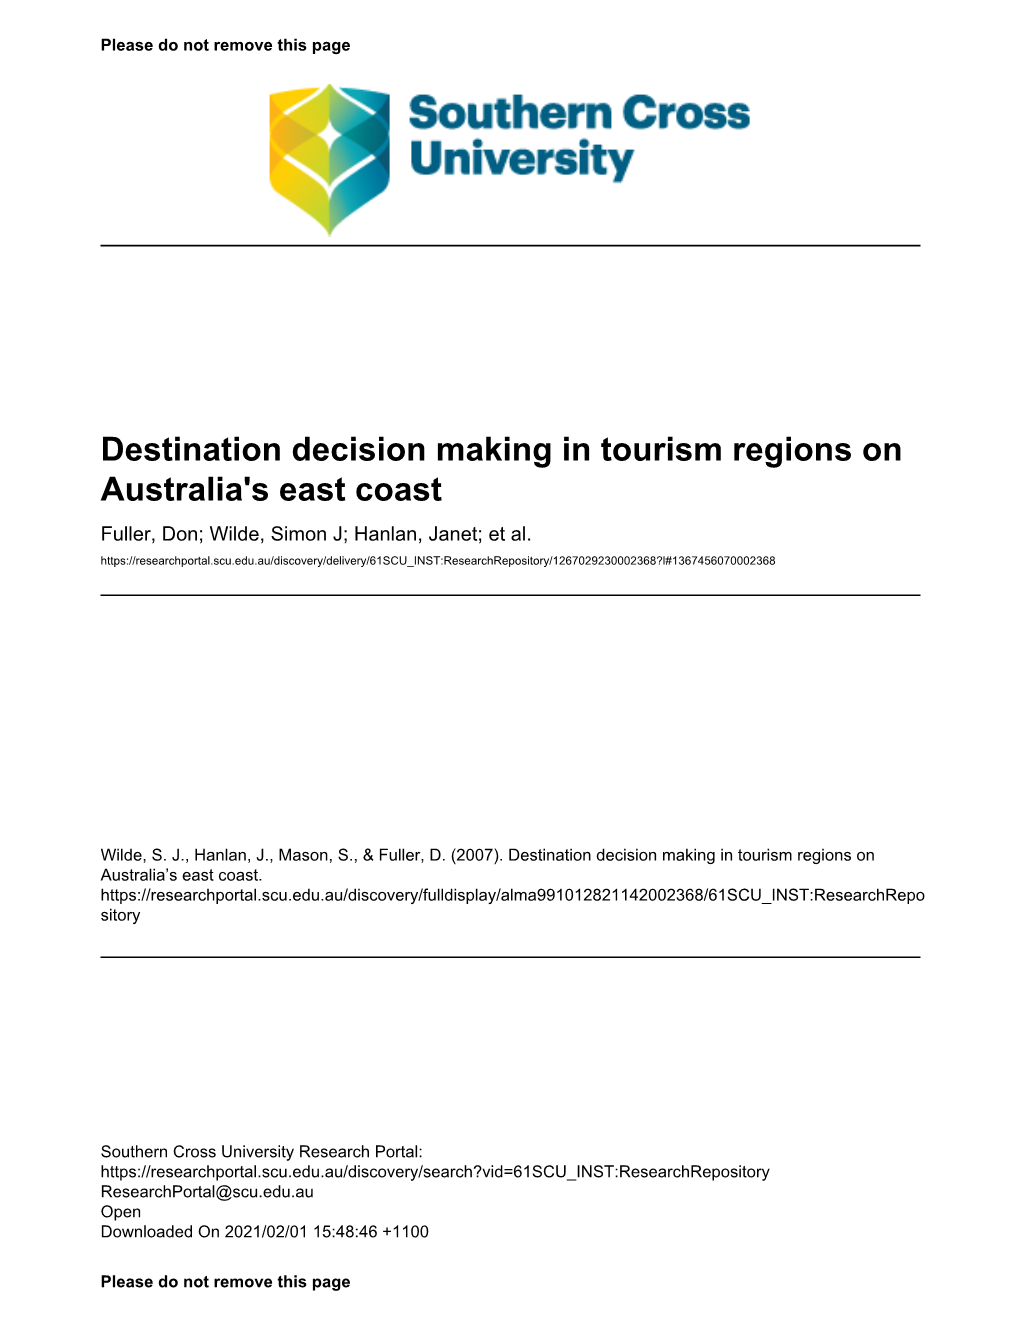 Destination Decision Making in Tourism Regions on Australia's East Coast Fuller, Don; Wilde, Simon J; Hanlan, Janet; Et Al